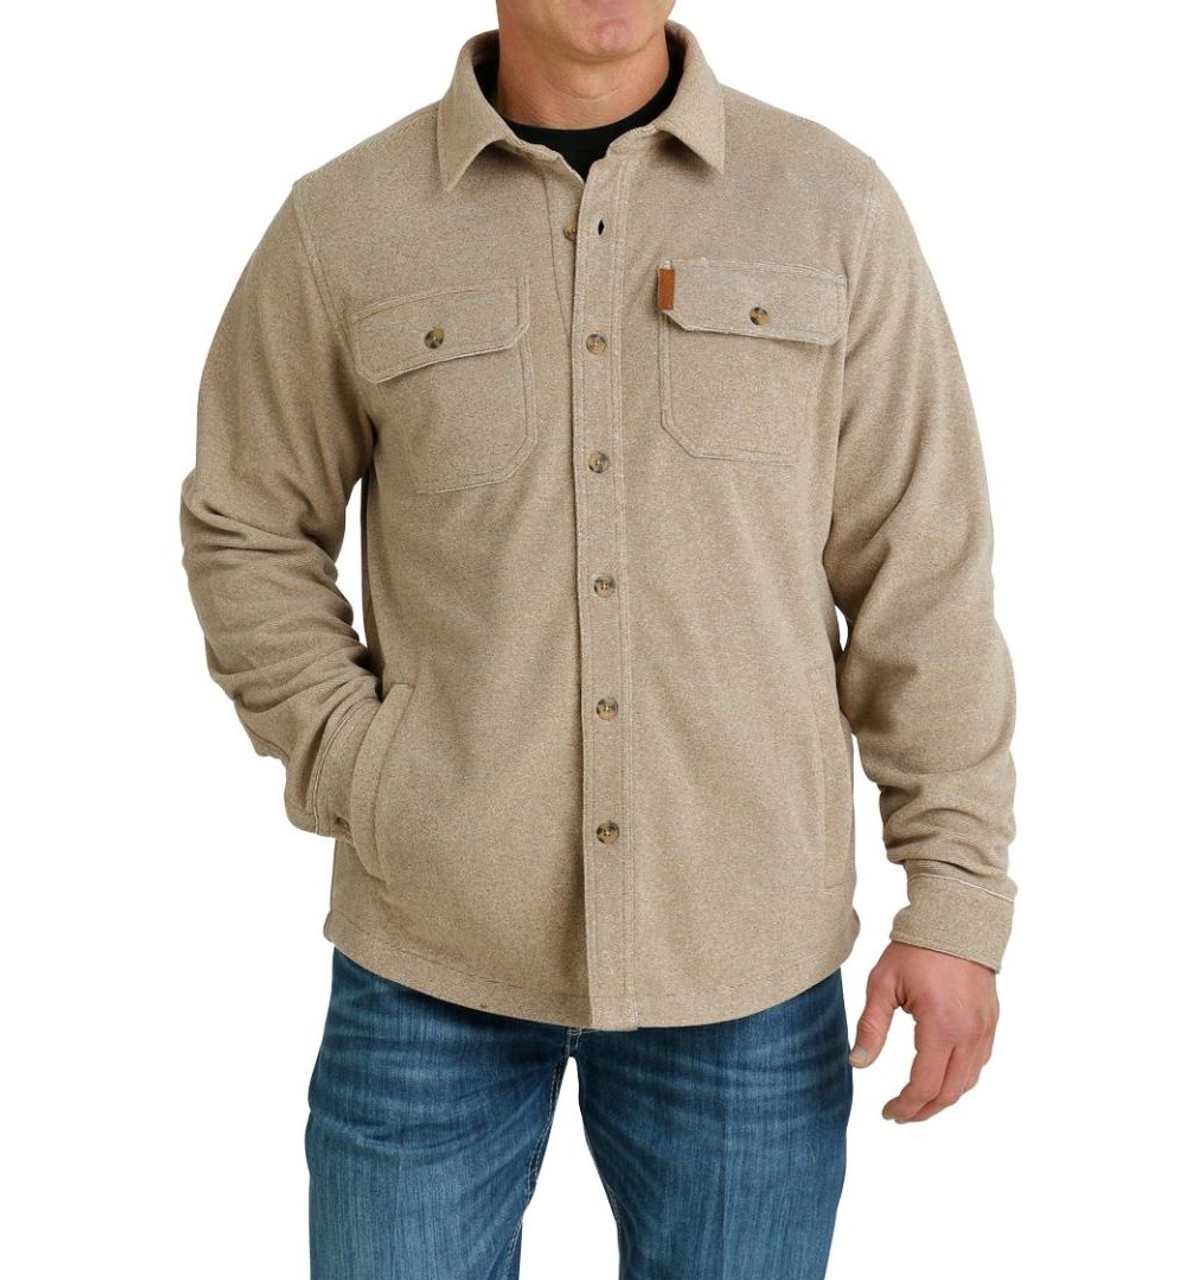 https://cdn11.bigcommerce.com/s-99vj2qx/images/stencil/1280x1280/products/27978/103766/men-polar-fleece-shirt-jacket-khaki-front-MWJ1229002-cinch__74119.1699987960.jpg?c=2